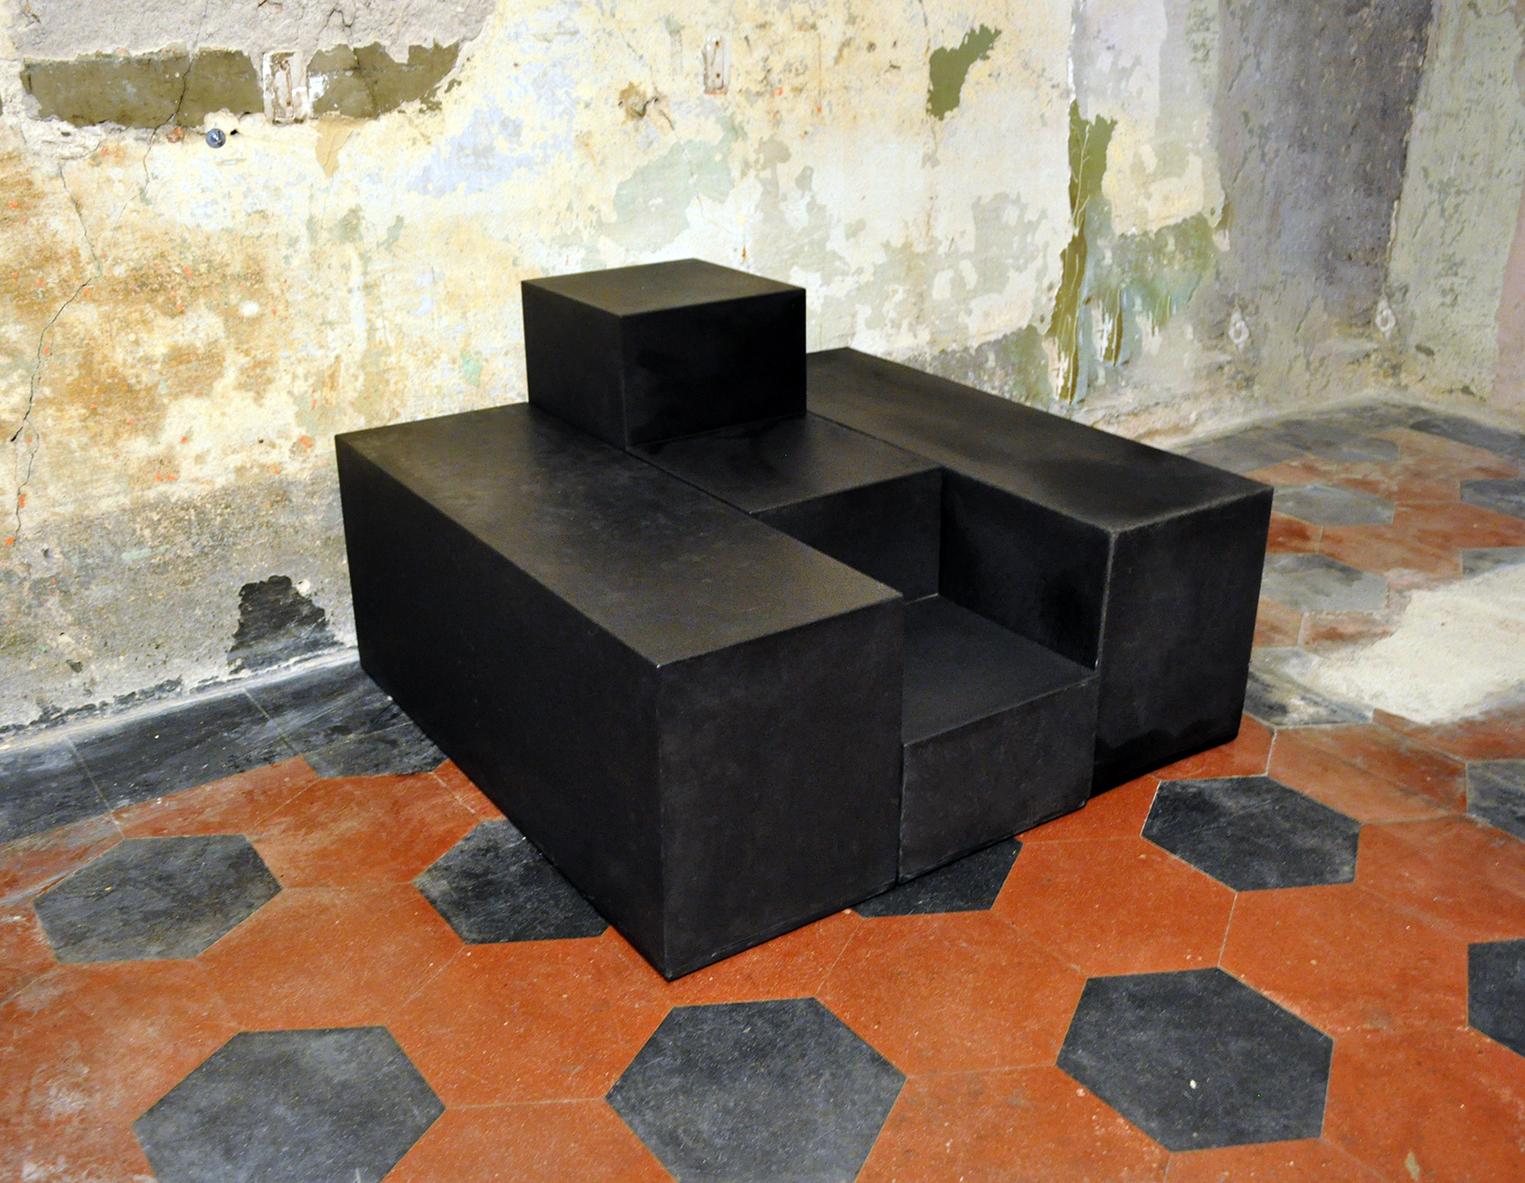 Modular sofa tables in pressed sponge.
Model: Gli Scacchi
Designer: Mario Bellini
Manufacturer: B&B Italia
1960s
Measures cm: 30 x 90 x 55
cm 30 x 90 x 37.